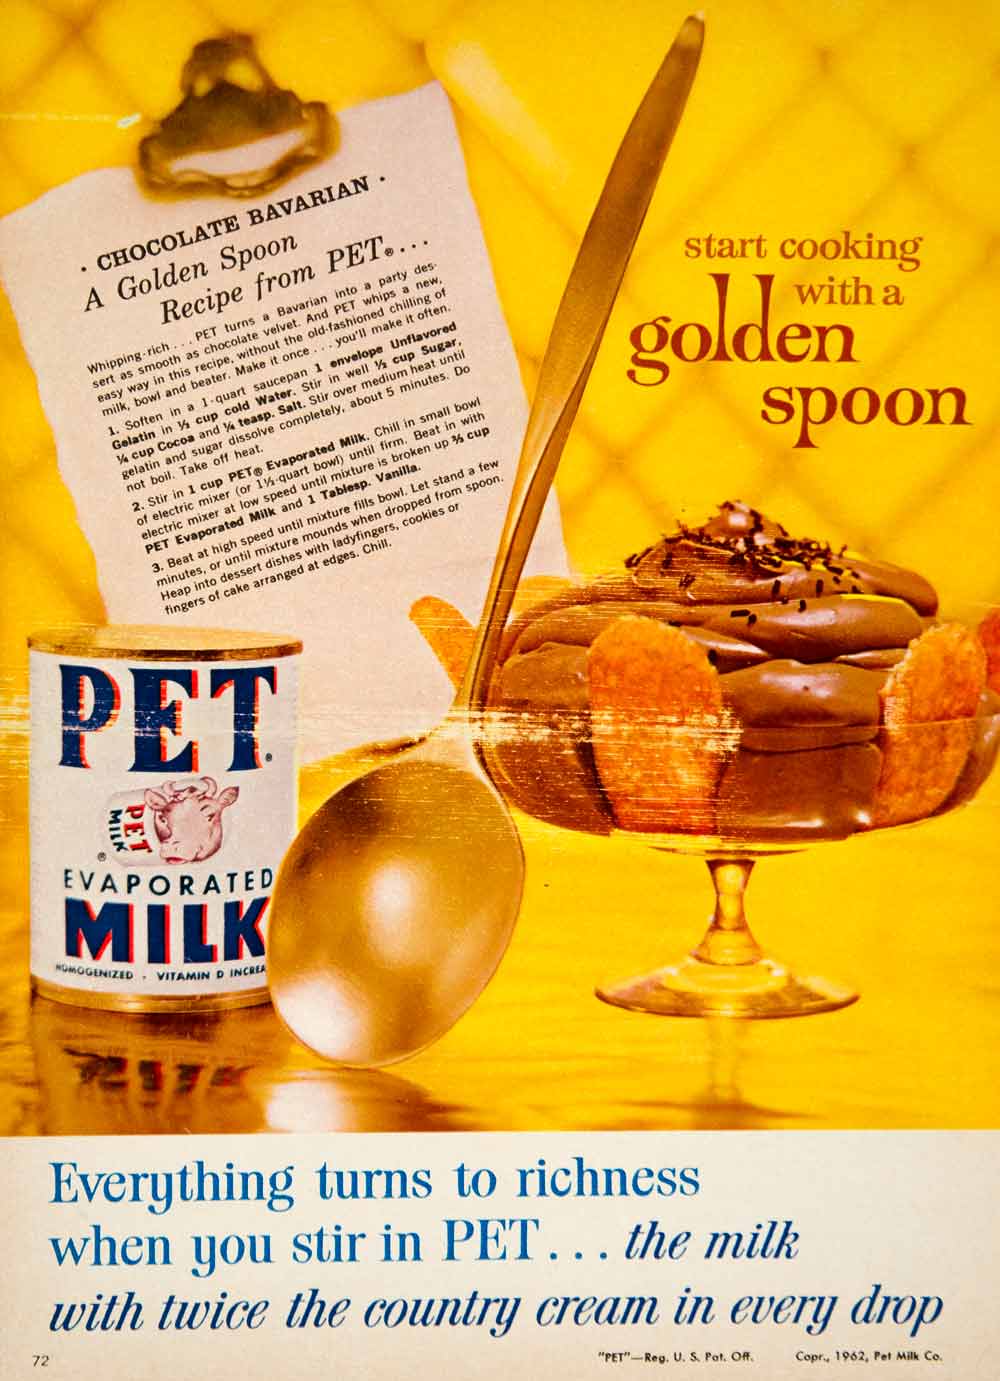 1962 Ad Vintage PET Evaporated Milk 60's Recipe Chocolate Bavarian Dessert YFR1